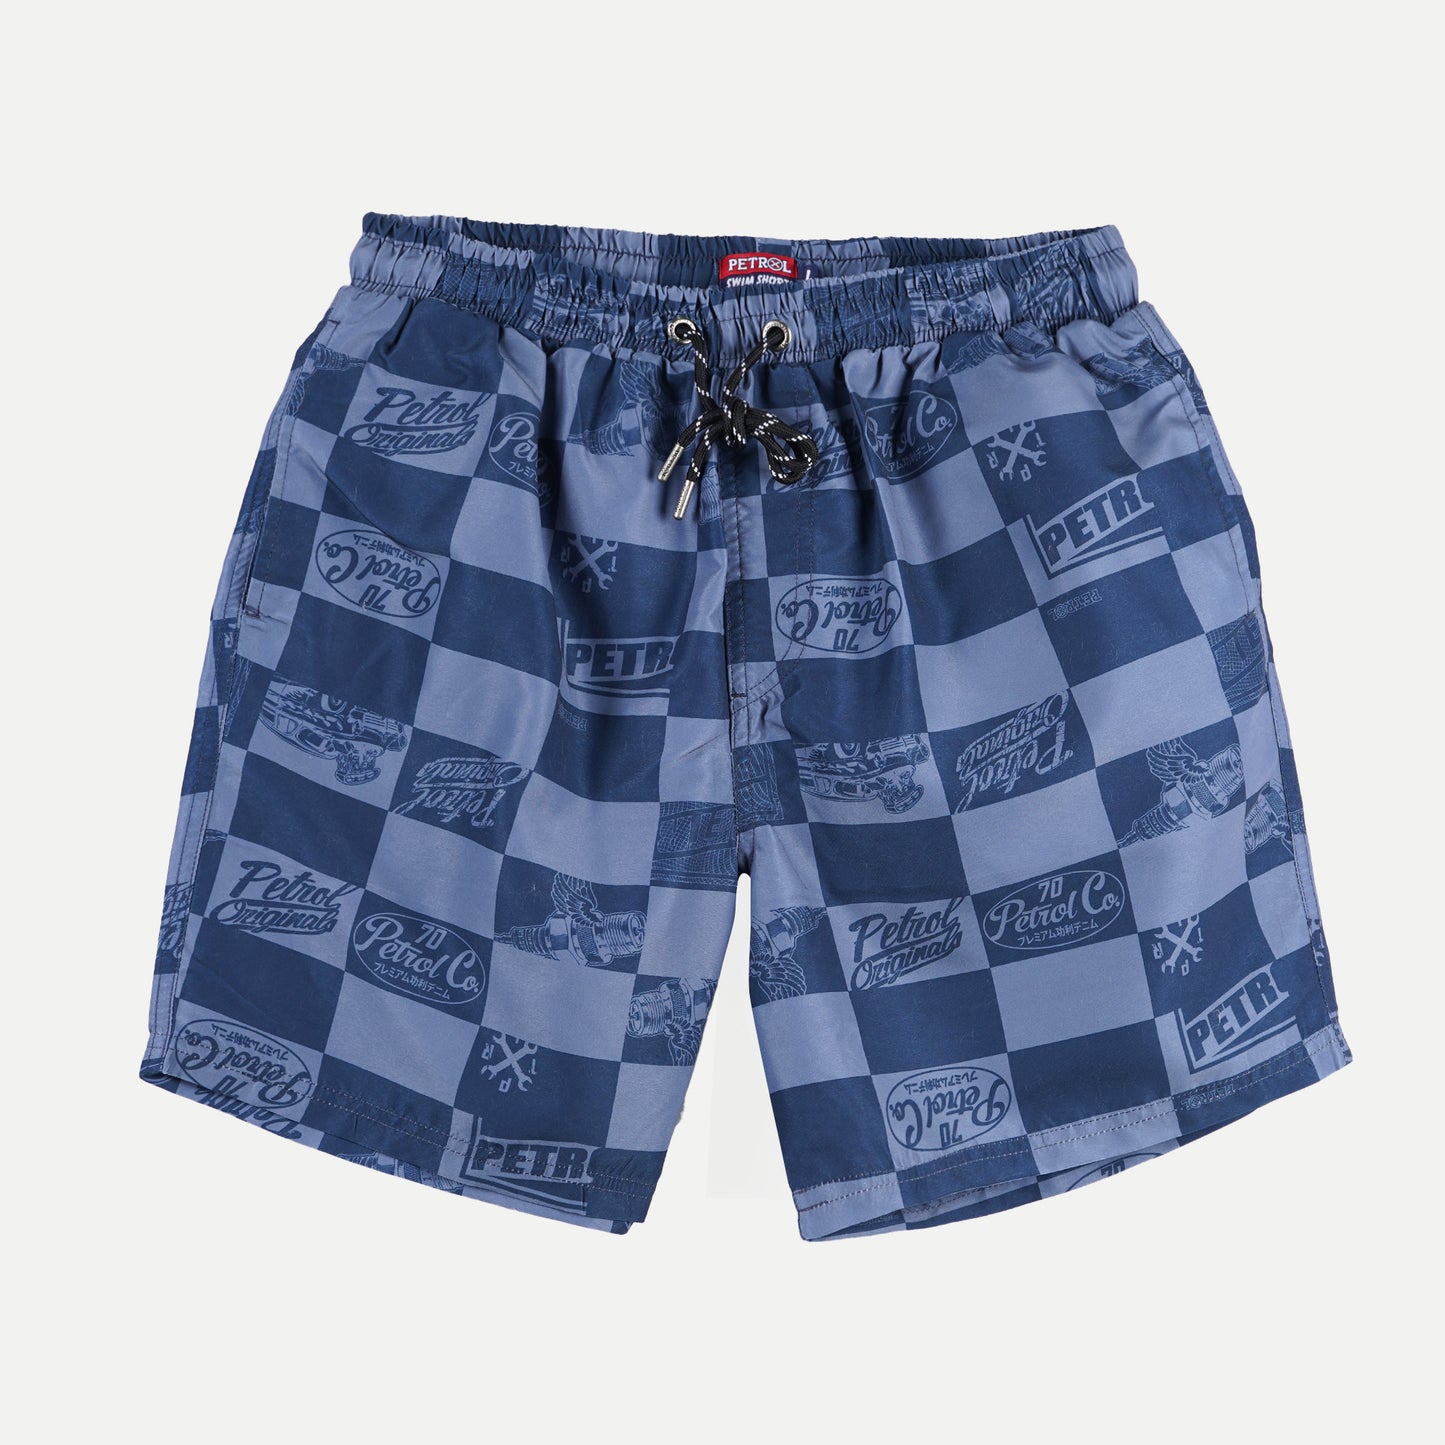 Petrol Modified Non Denim Board Shorts for Men Regular Fitting Garment Wash Cotton Fabric Casual Short Navy Blue Swim short for Men 133794 (Navy Blue)